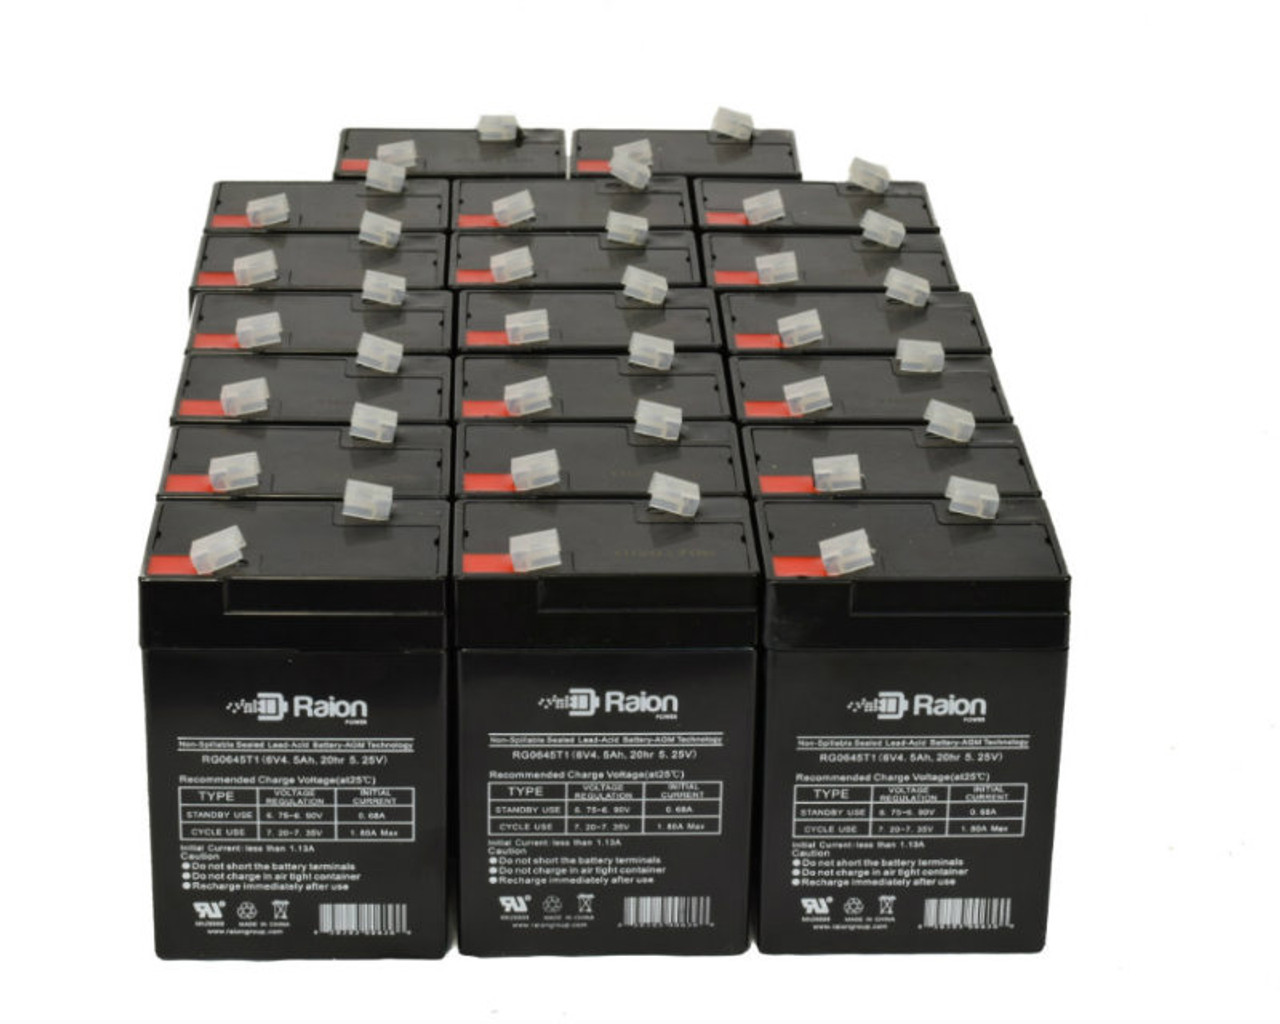 Raion Power 6V 4.5Ah Replacement Emergency Light Battery for Prescolite 12-706 - 20 Pack